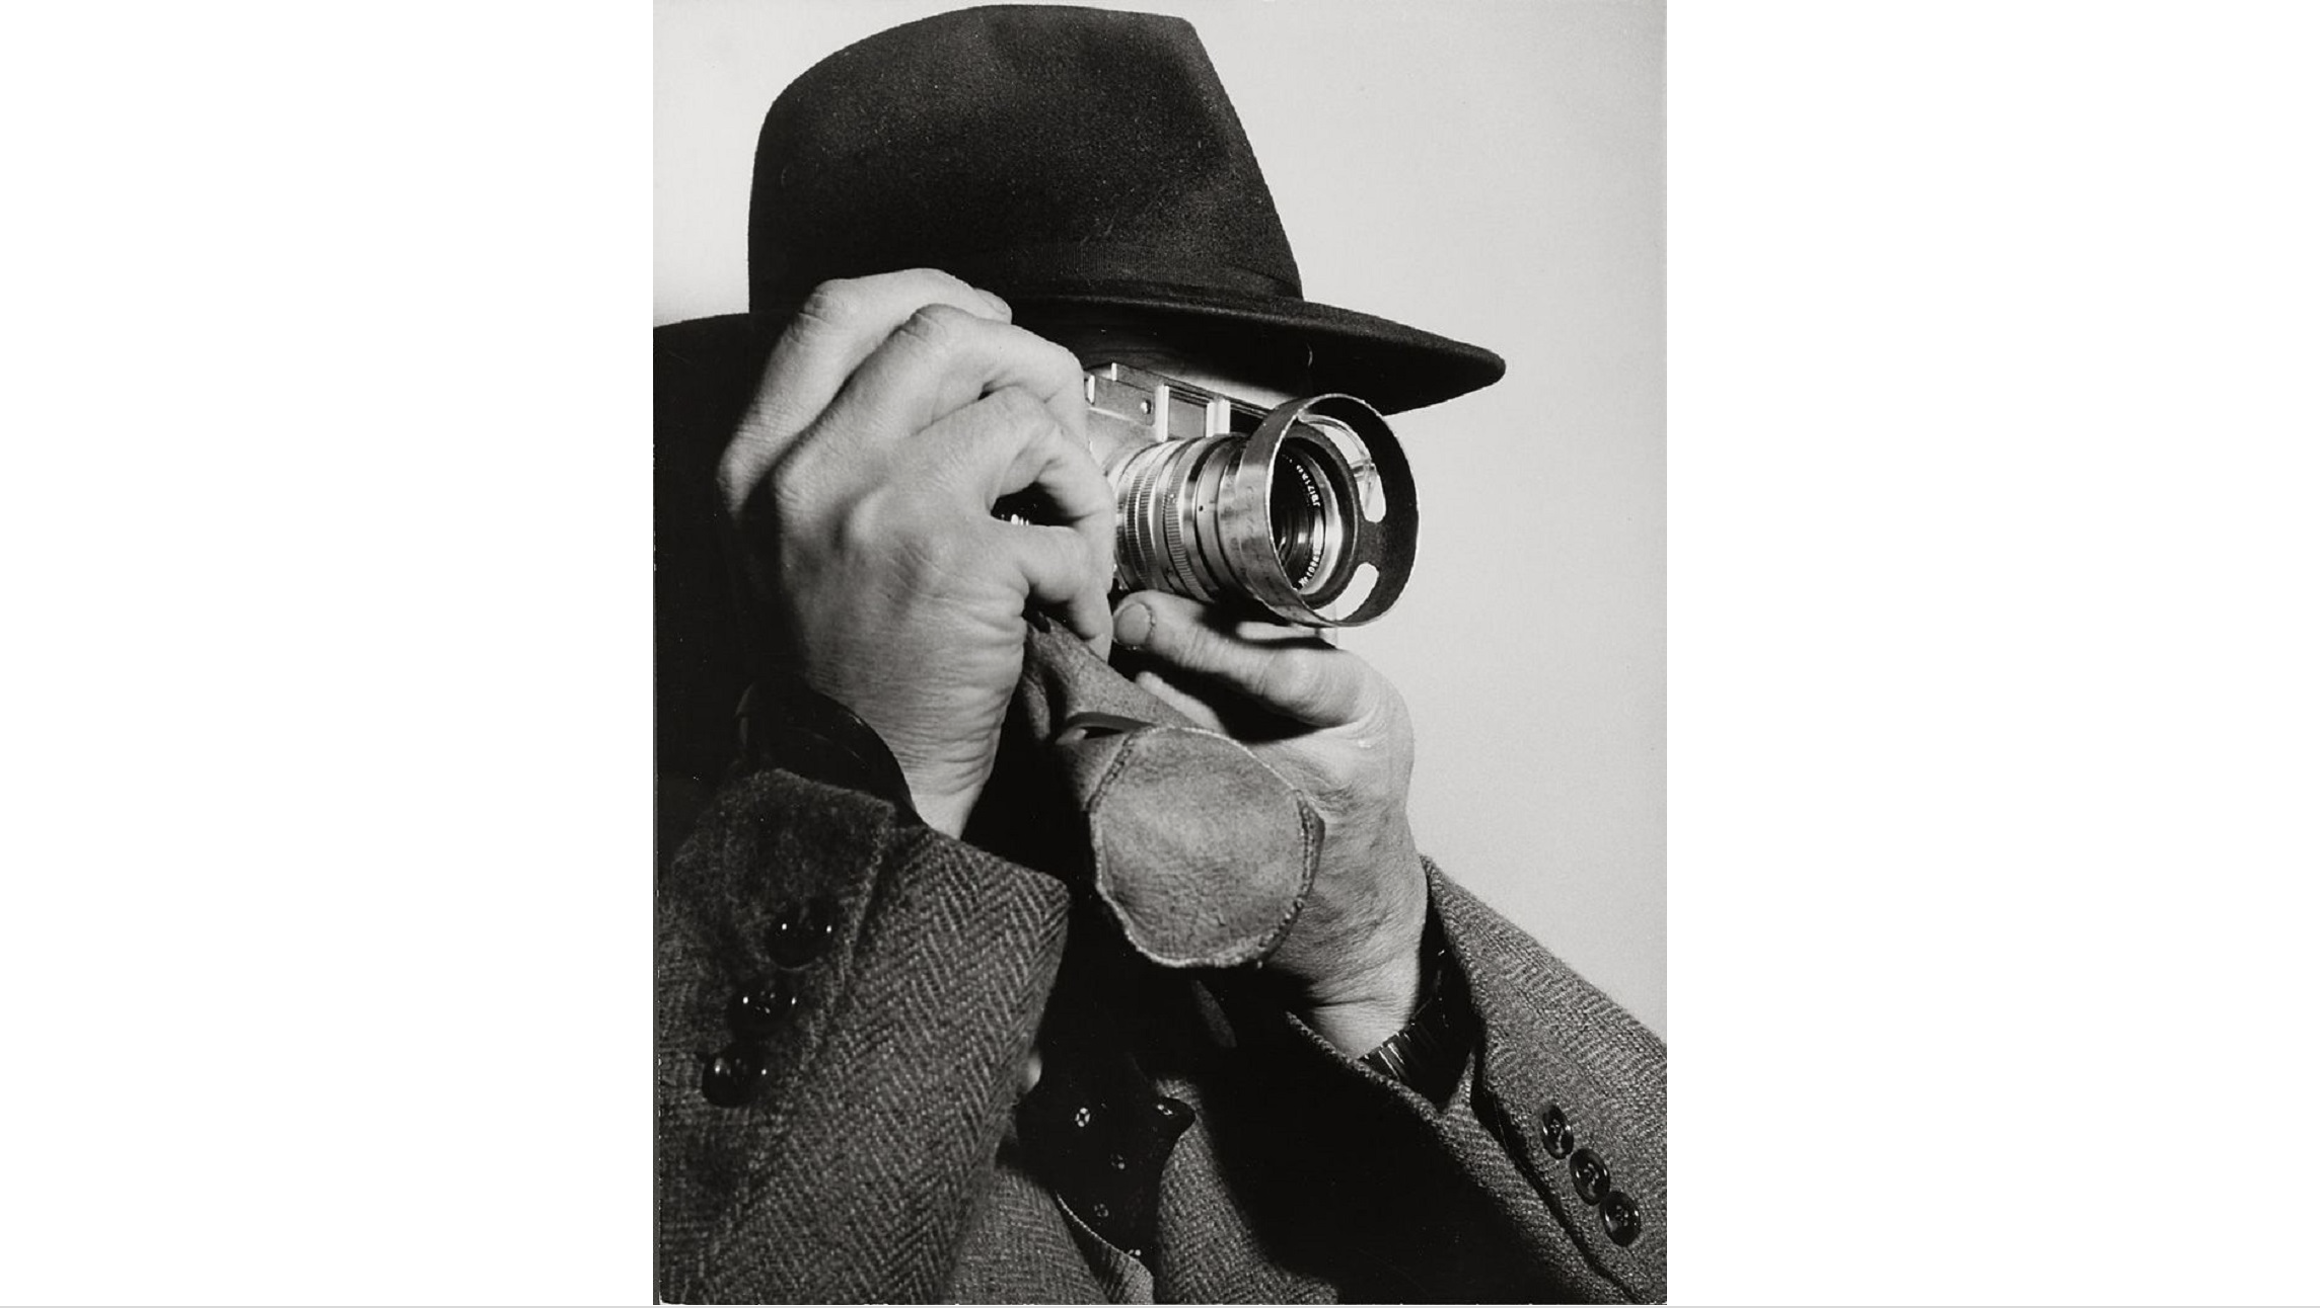 Dmitri Kessel. "Henri Cartier-Bresson and his Leica M3", 1955. Vintage silver gelatin photograph. 34 x 26,5 cm